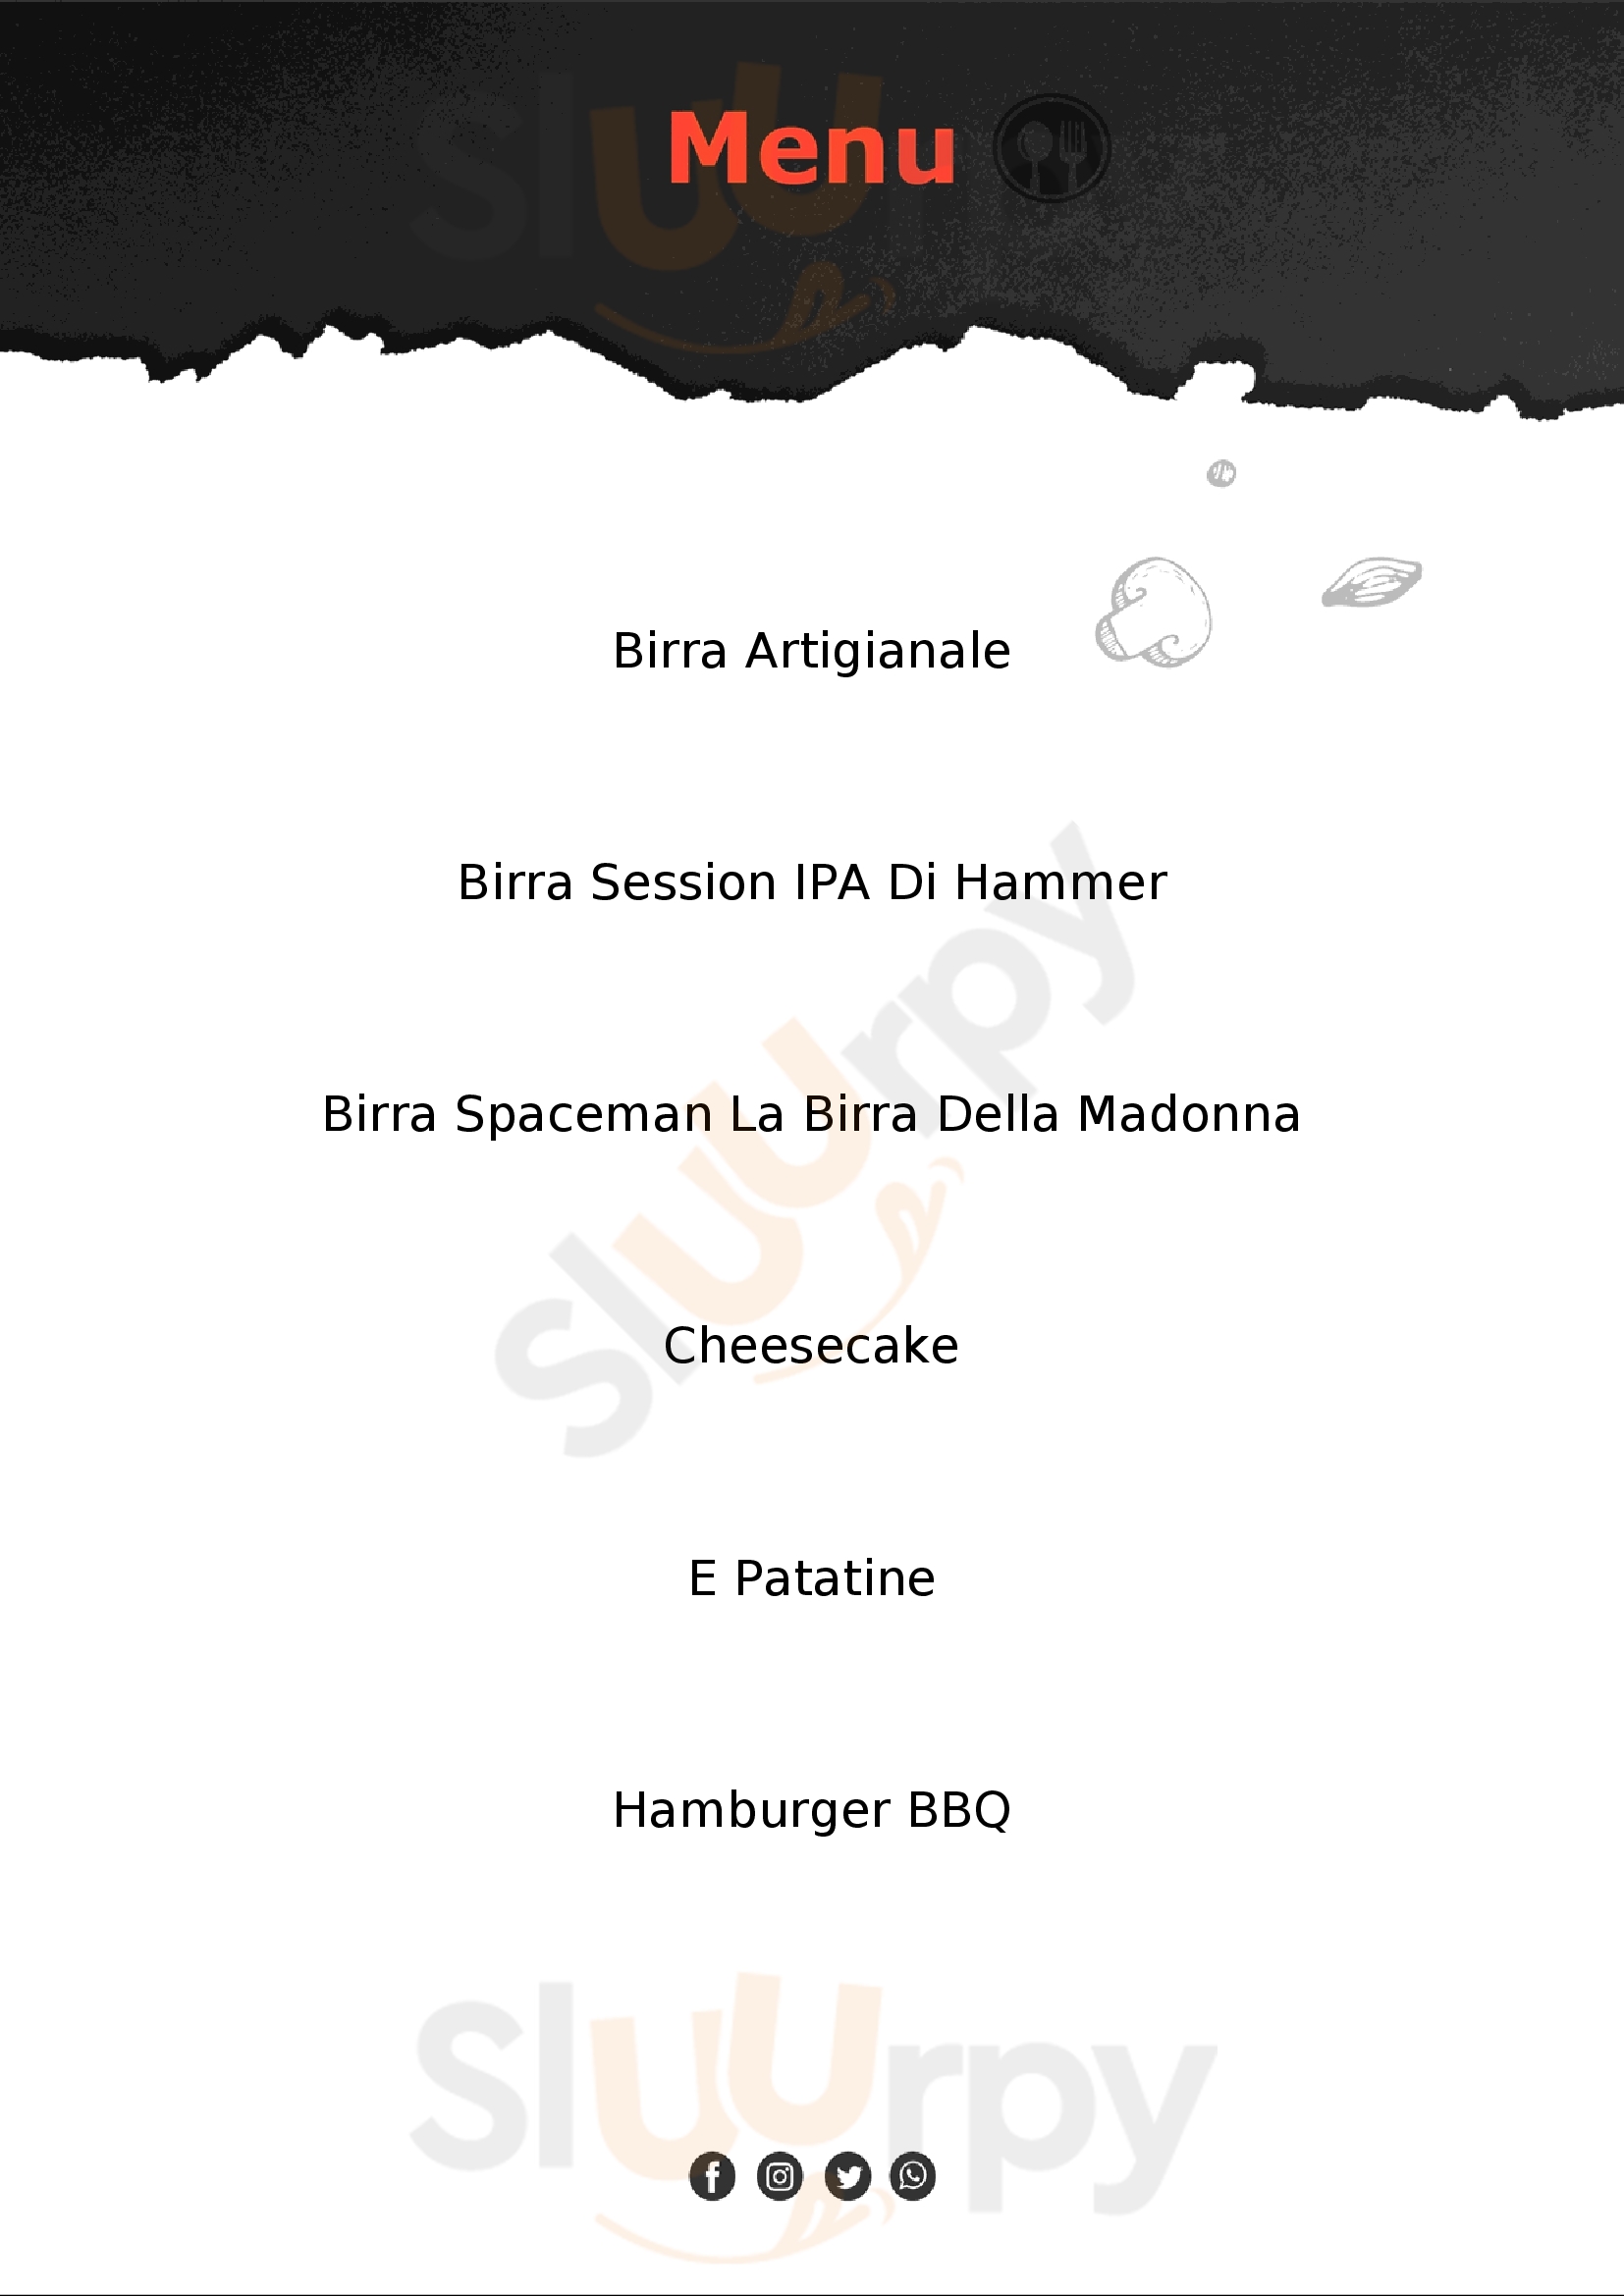 St. George Birreria Con Cucina Novi Ligure menù 1 pagina